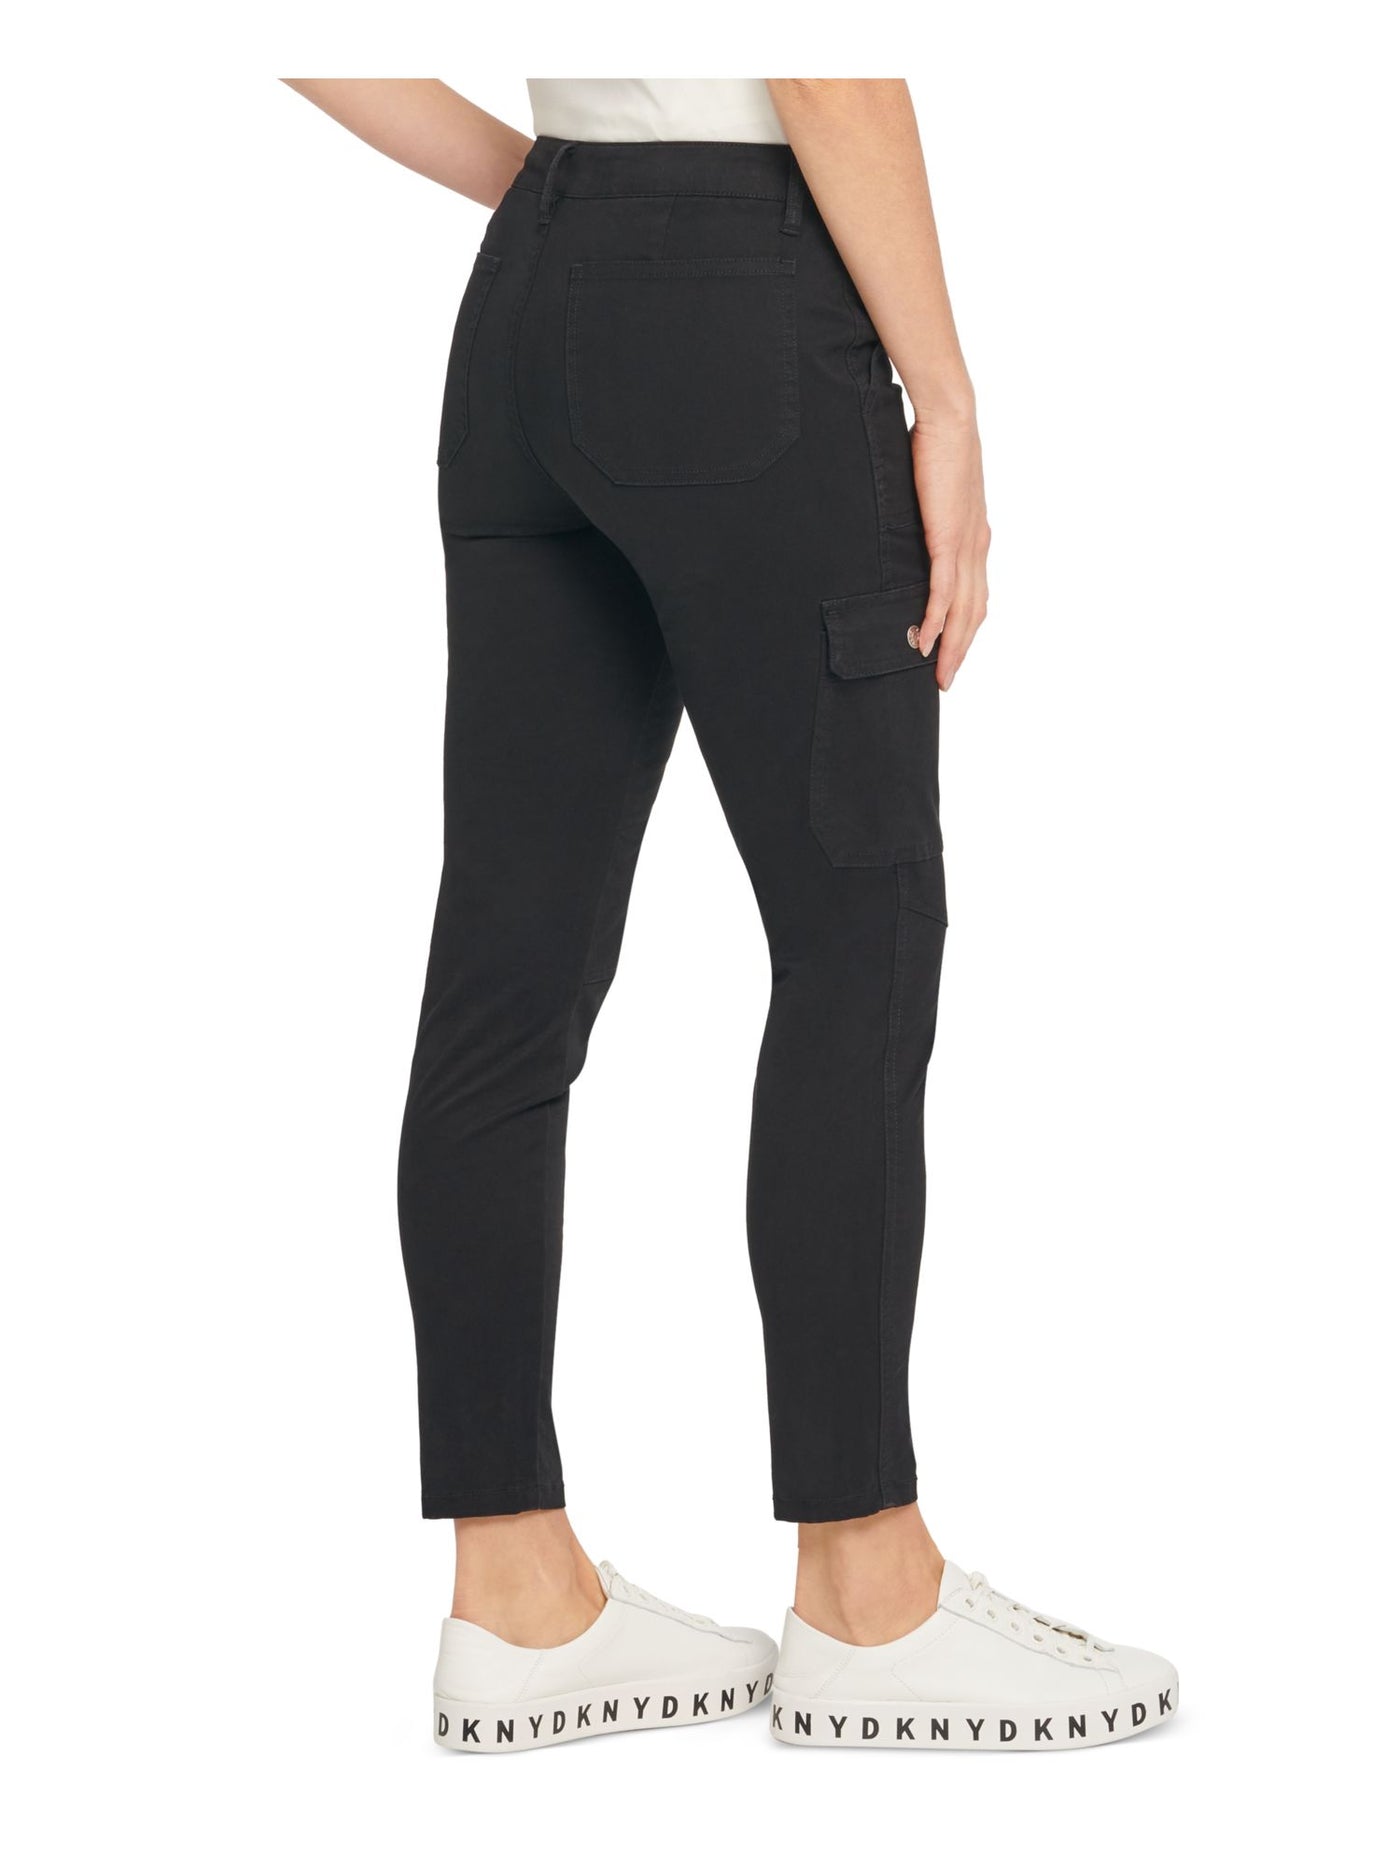 DKNY Womens Black Zippered Pocketed Skinny Pants 27 Waist